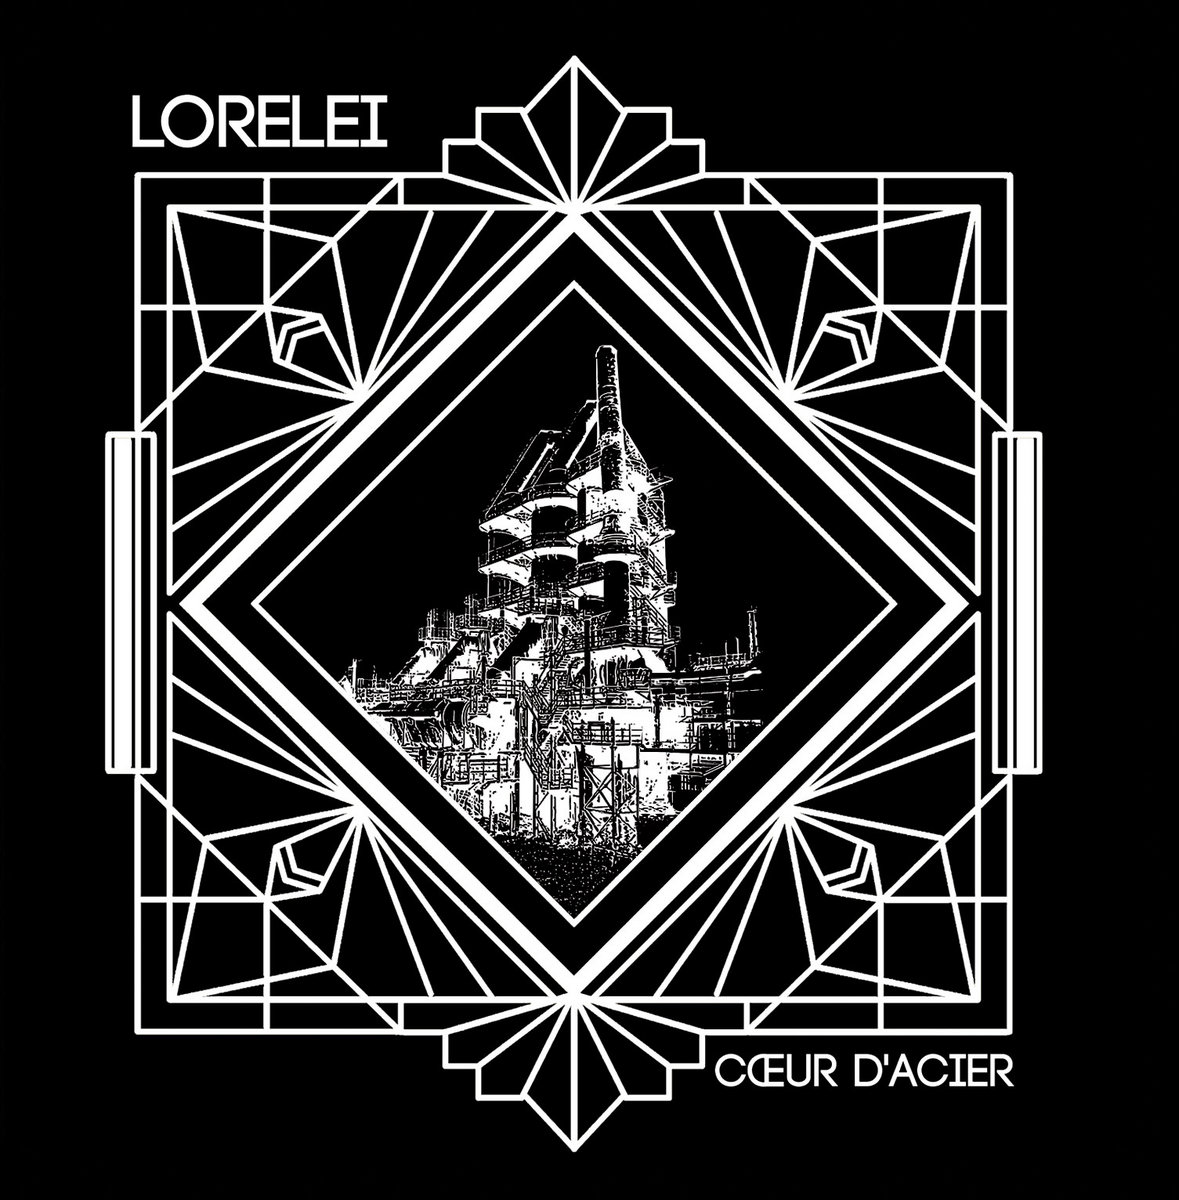 LORELEI "Coeur d'acier" - 33T + CD